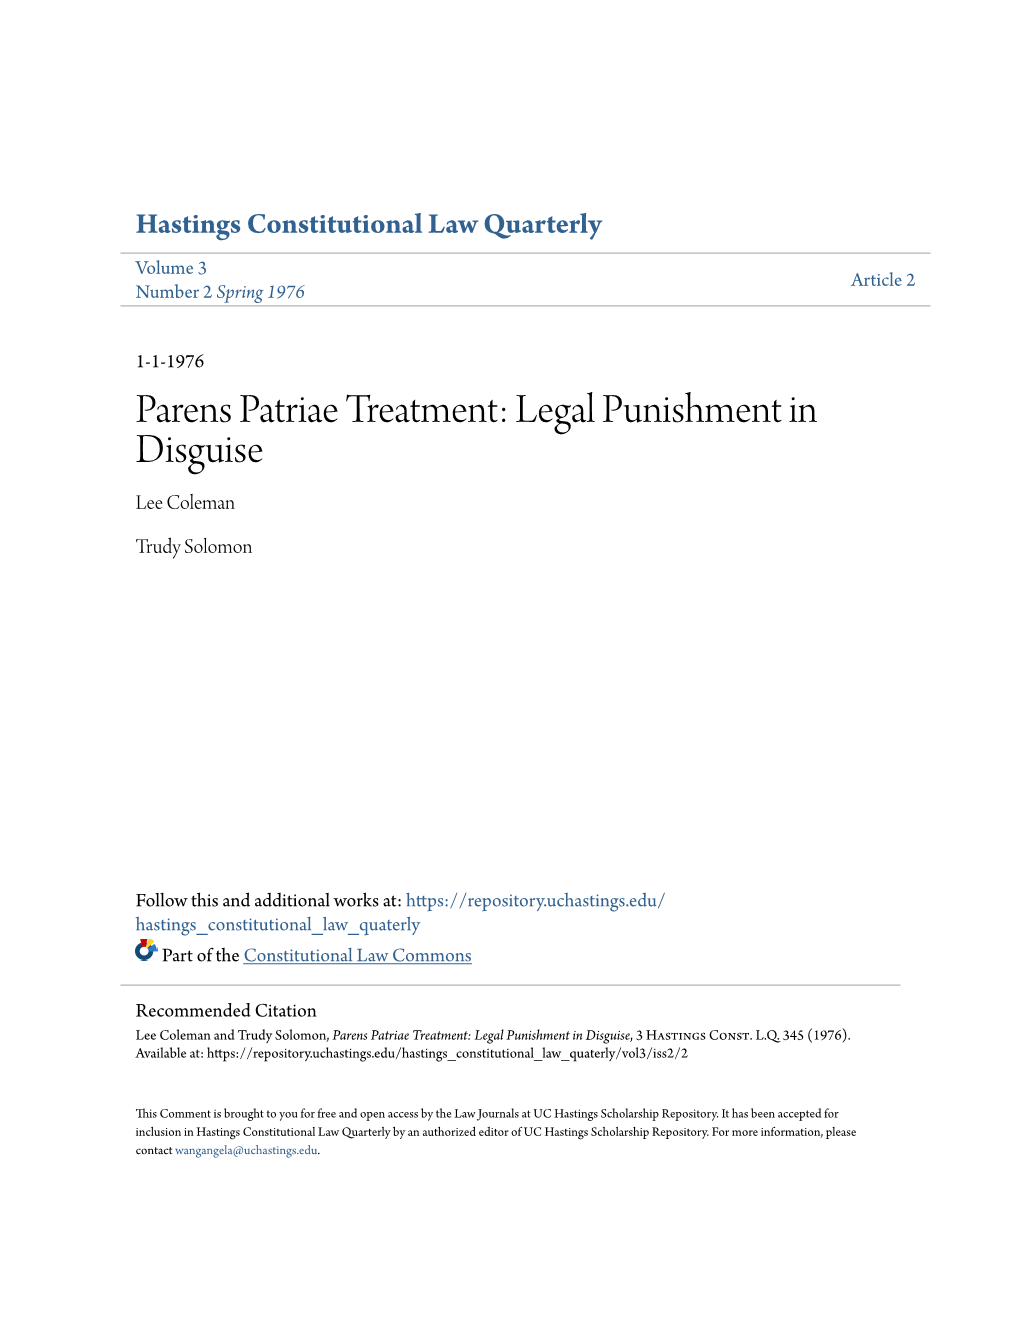 Parens Patriae Treatment: Legal Punishment in Disguise Lee Coleman